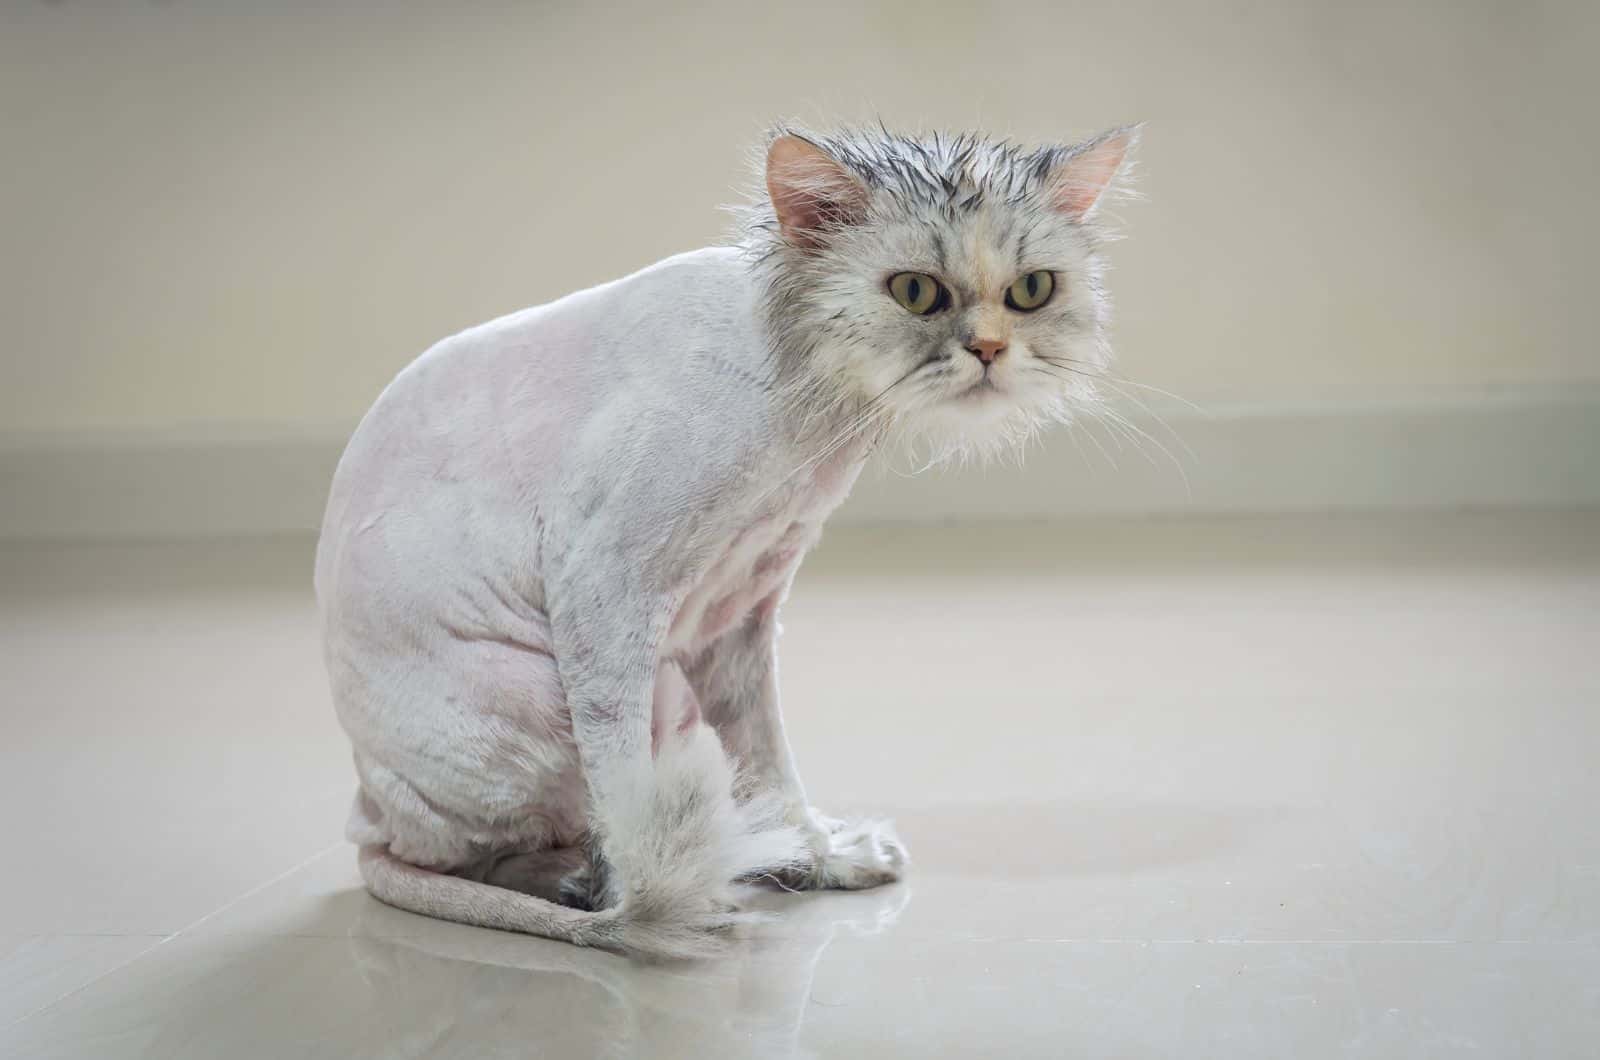 shaved cat sitting on floor